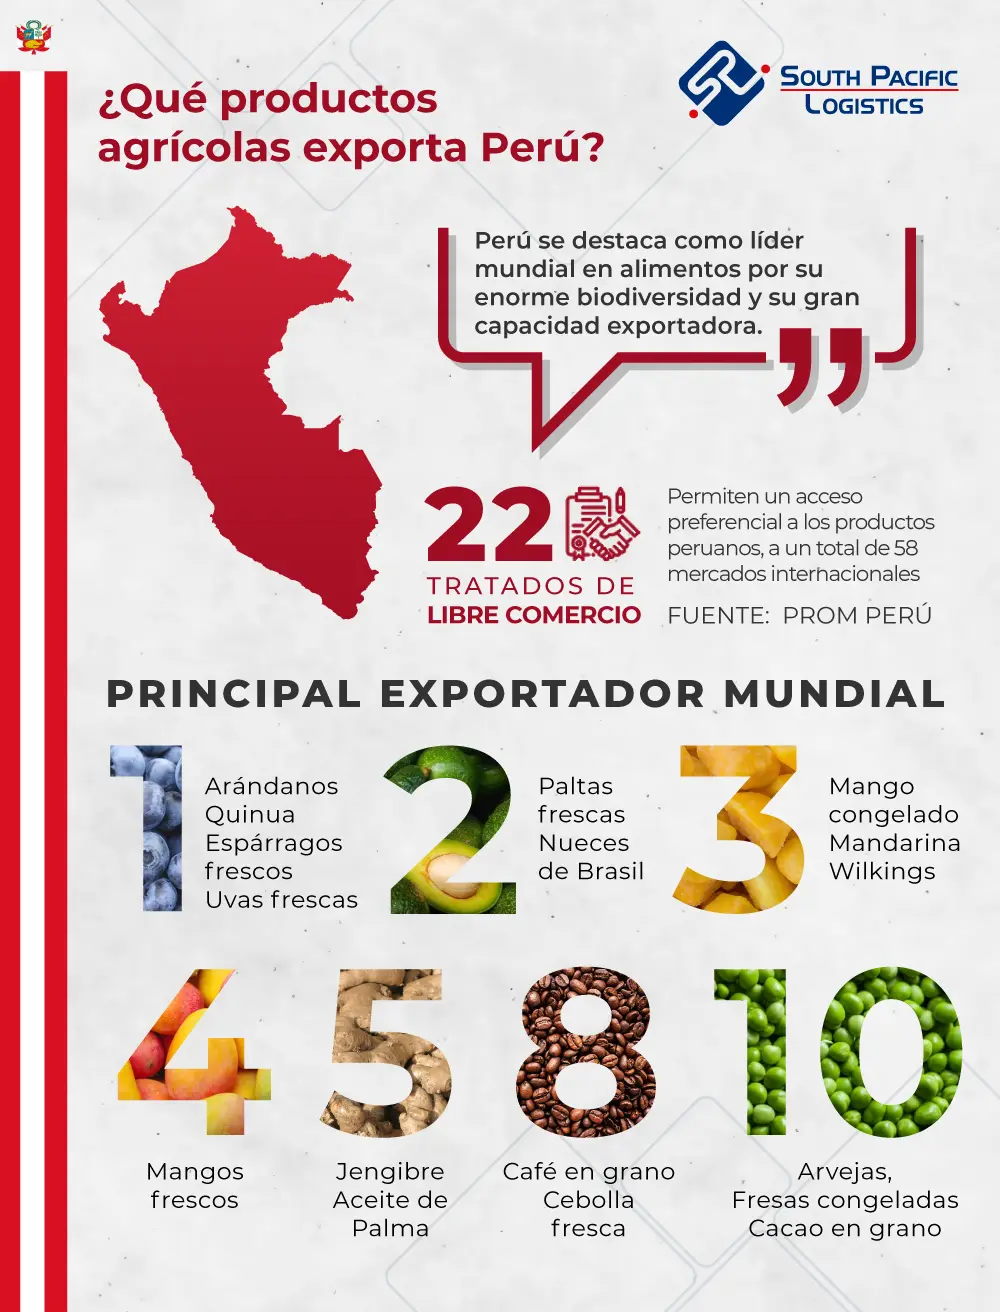 Infografia sobre productos agricolas que exporta Peru